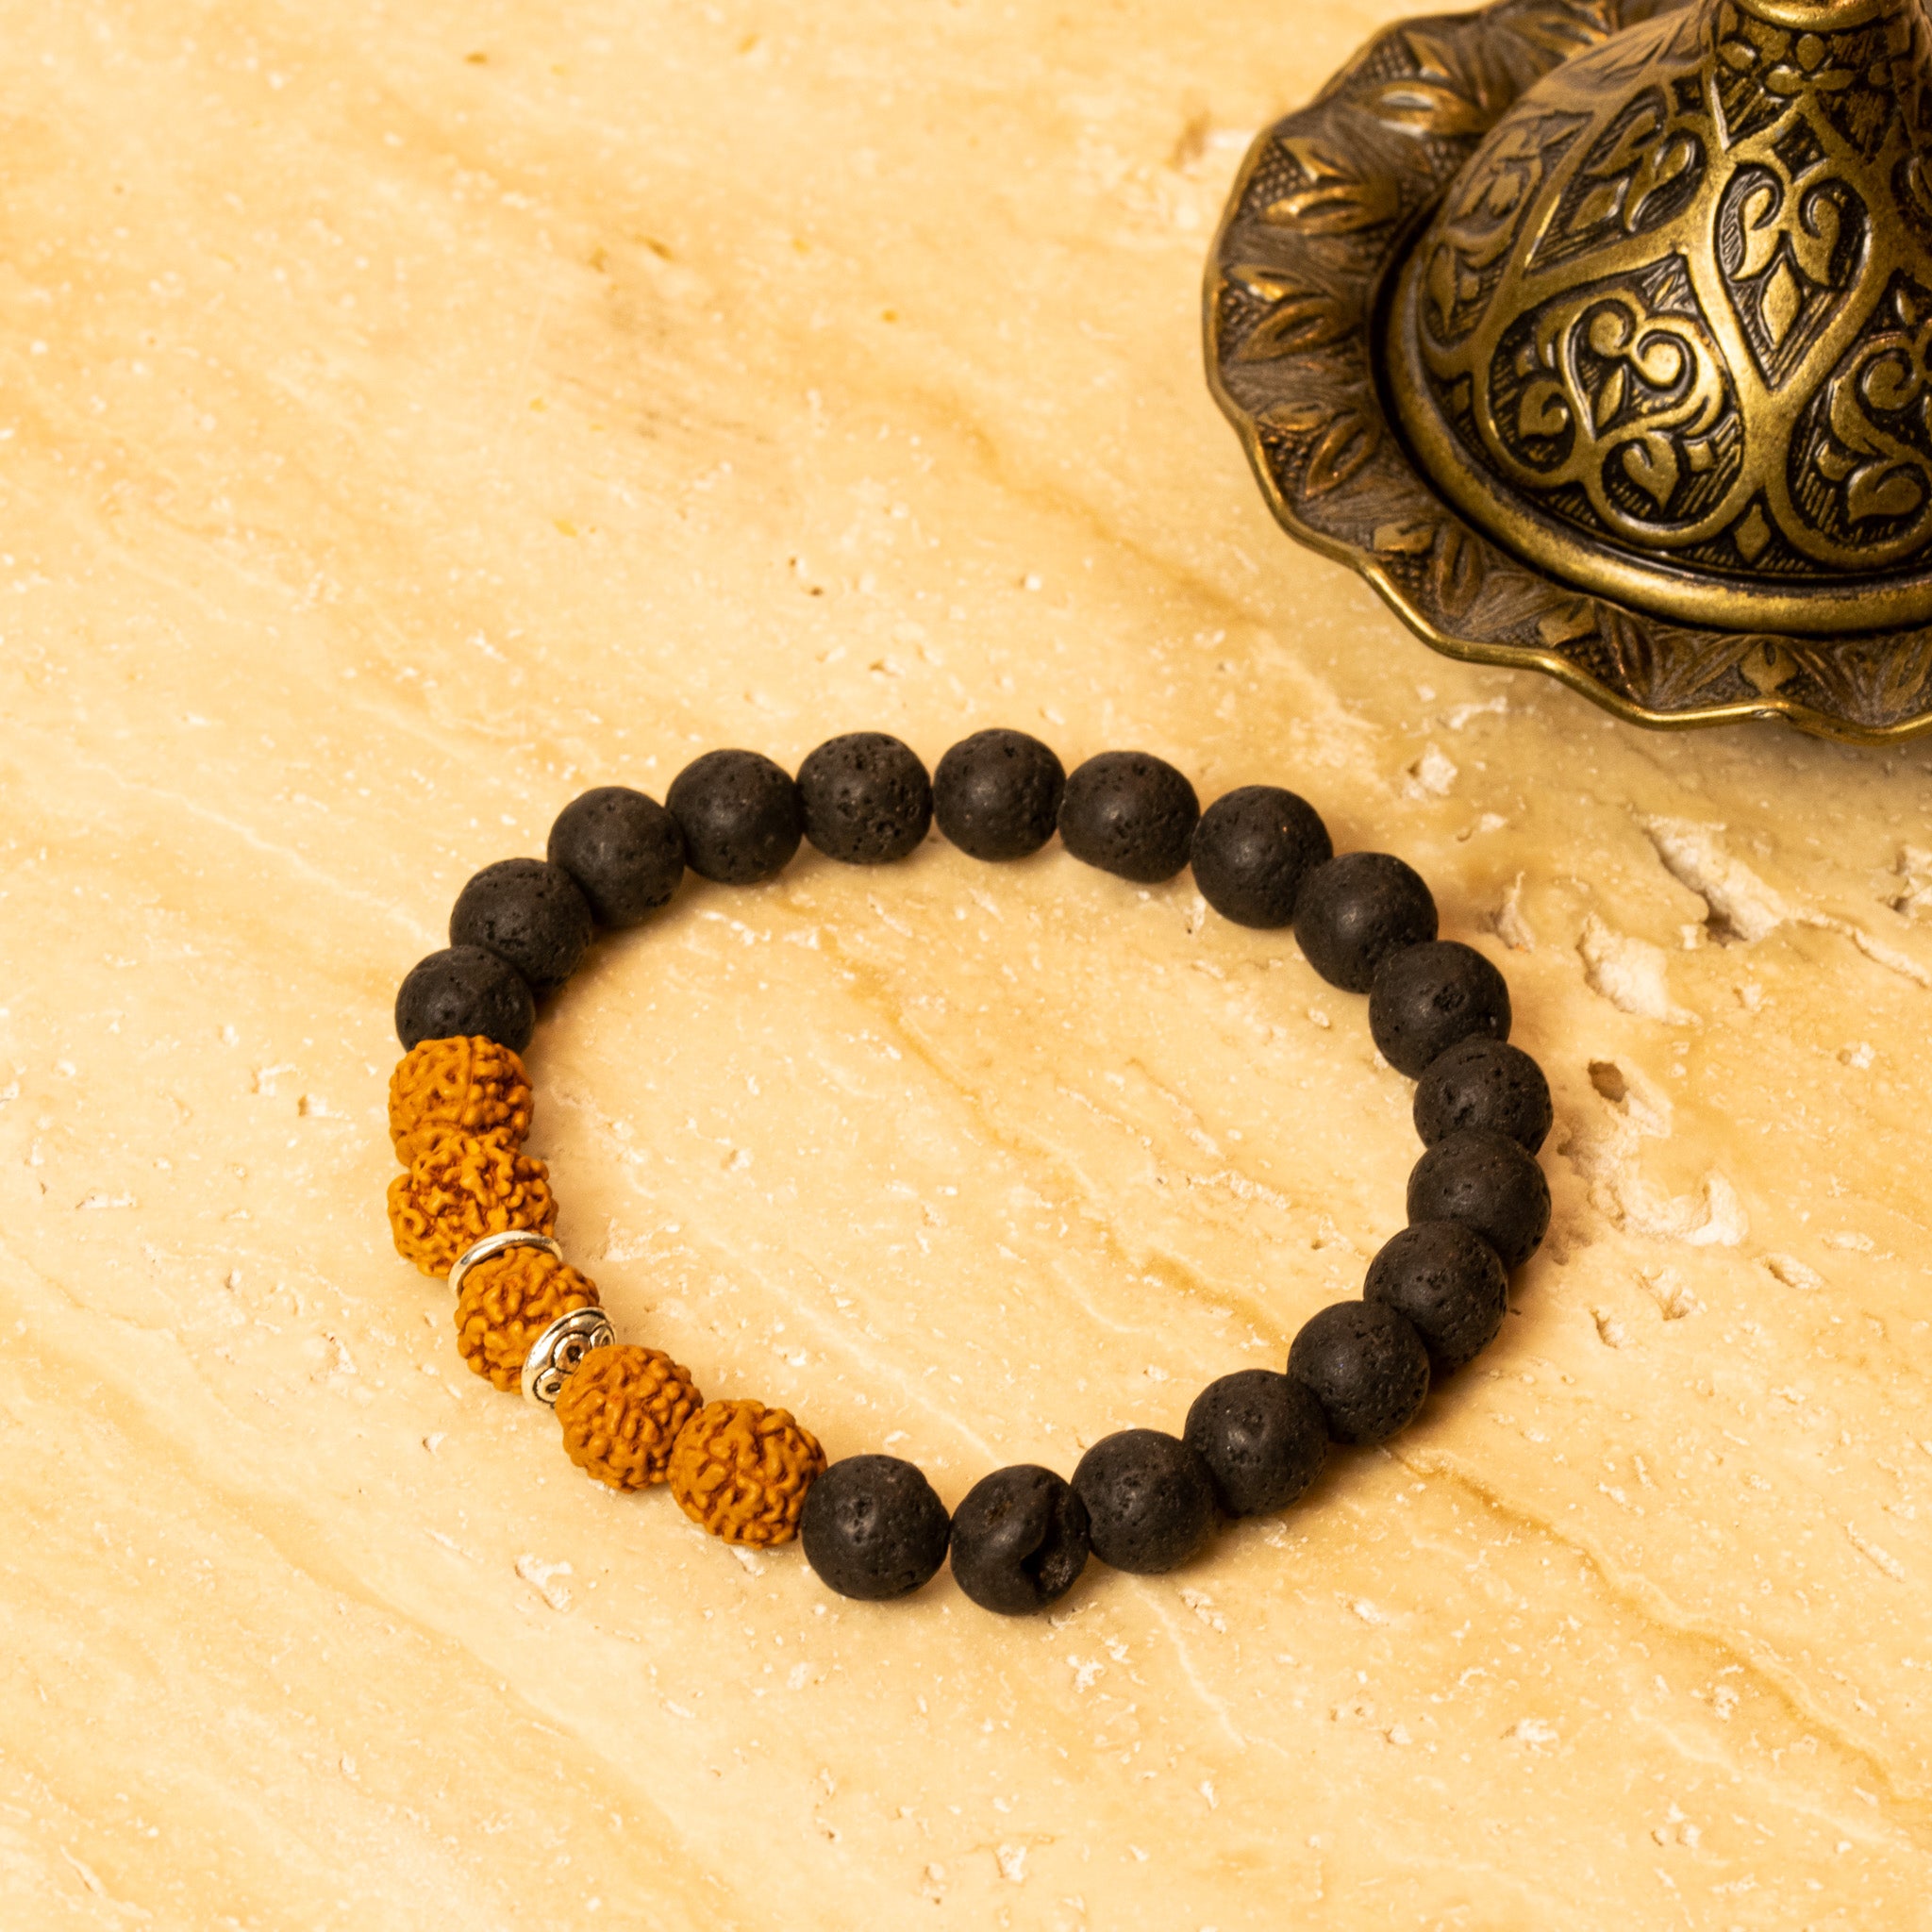 Rudraksh and Lava Stone bracelet for success